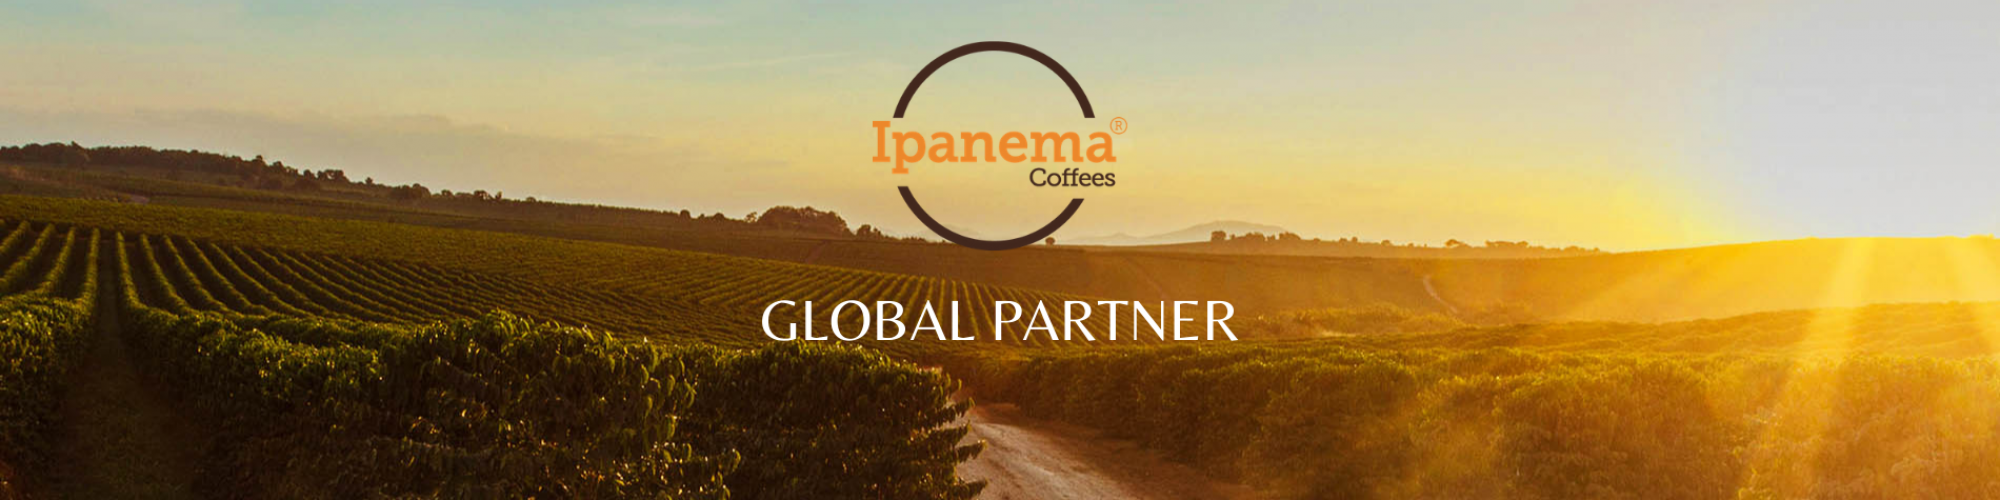 fresh ocs partner global ipanema coffees